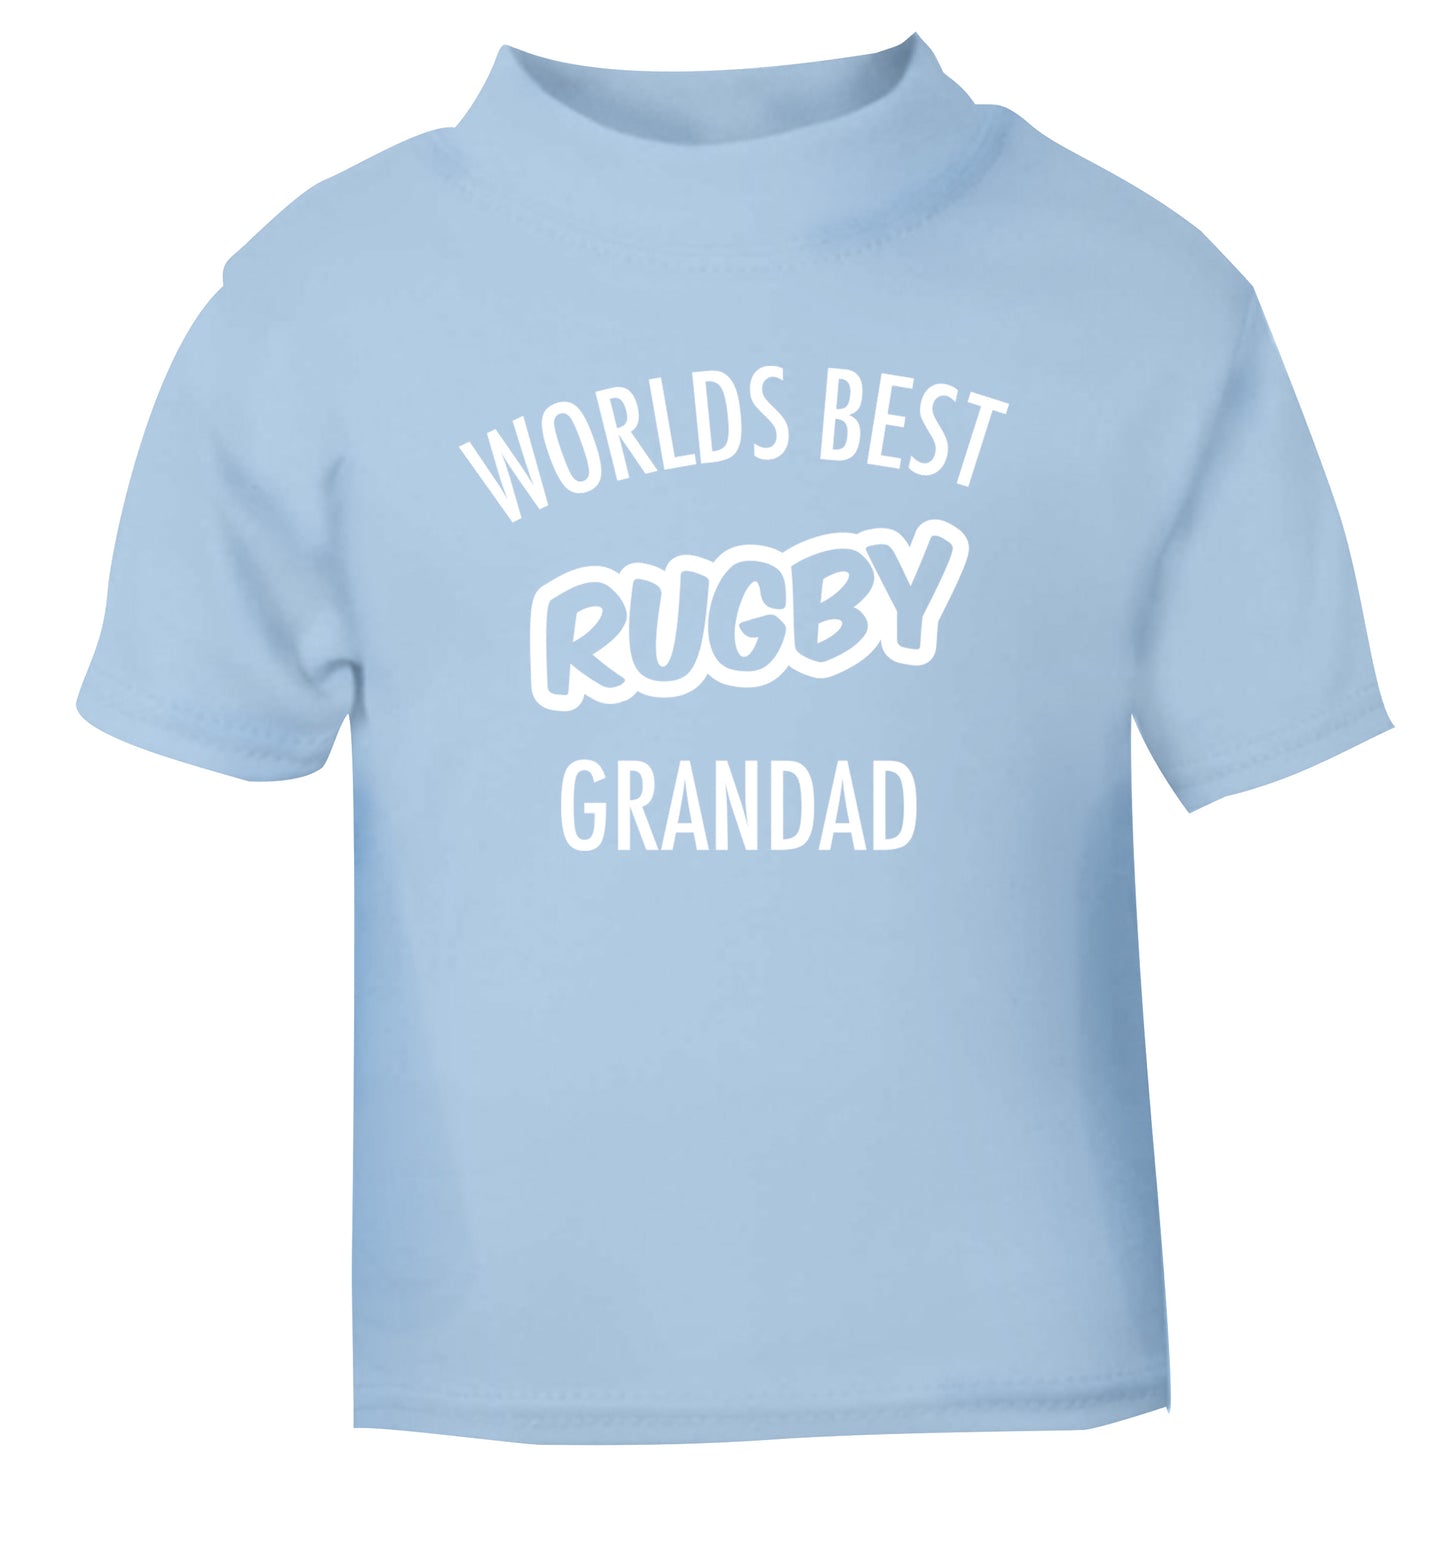 Worlds best rugby grandad light blue Baby Toddler Tshirt 2 Years